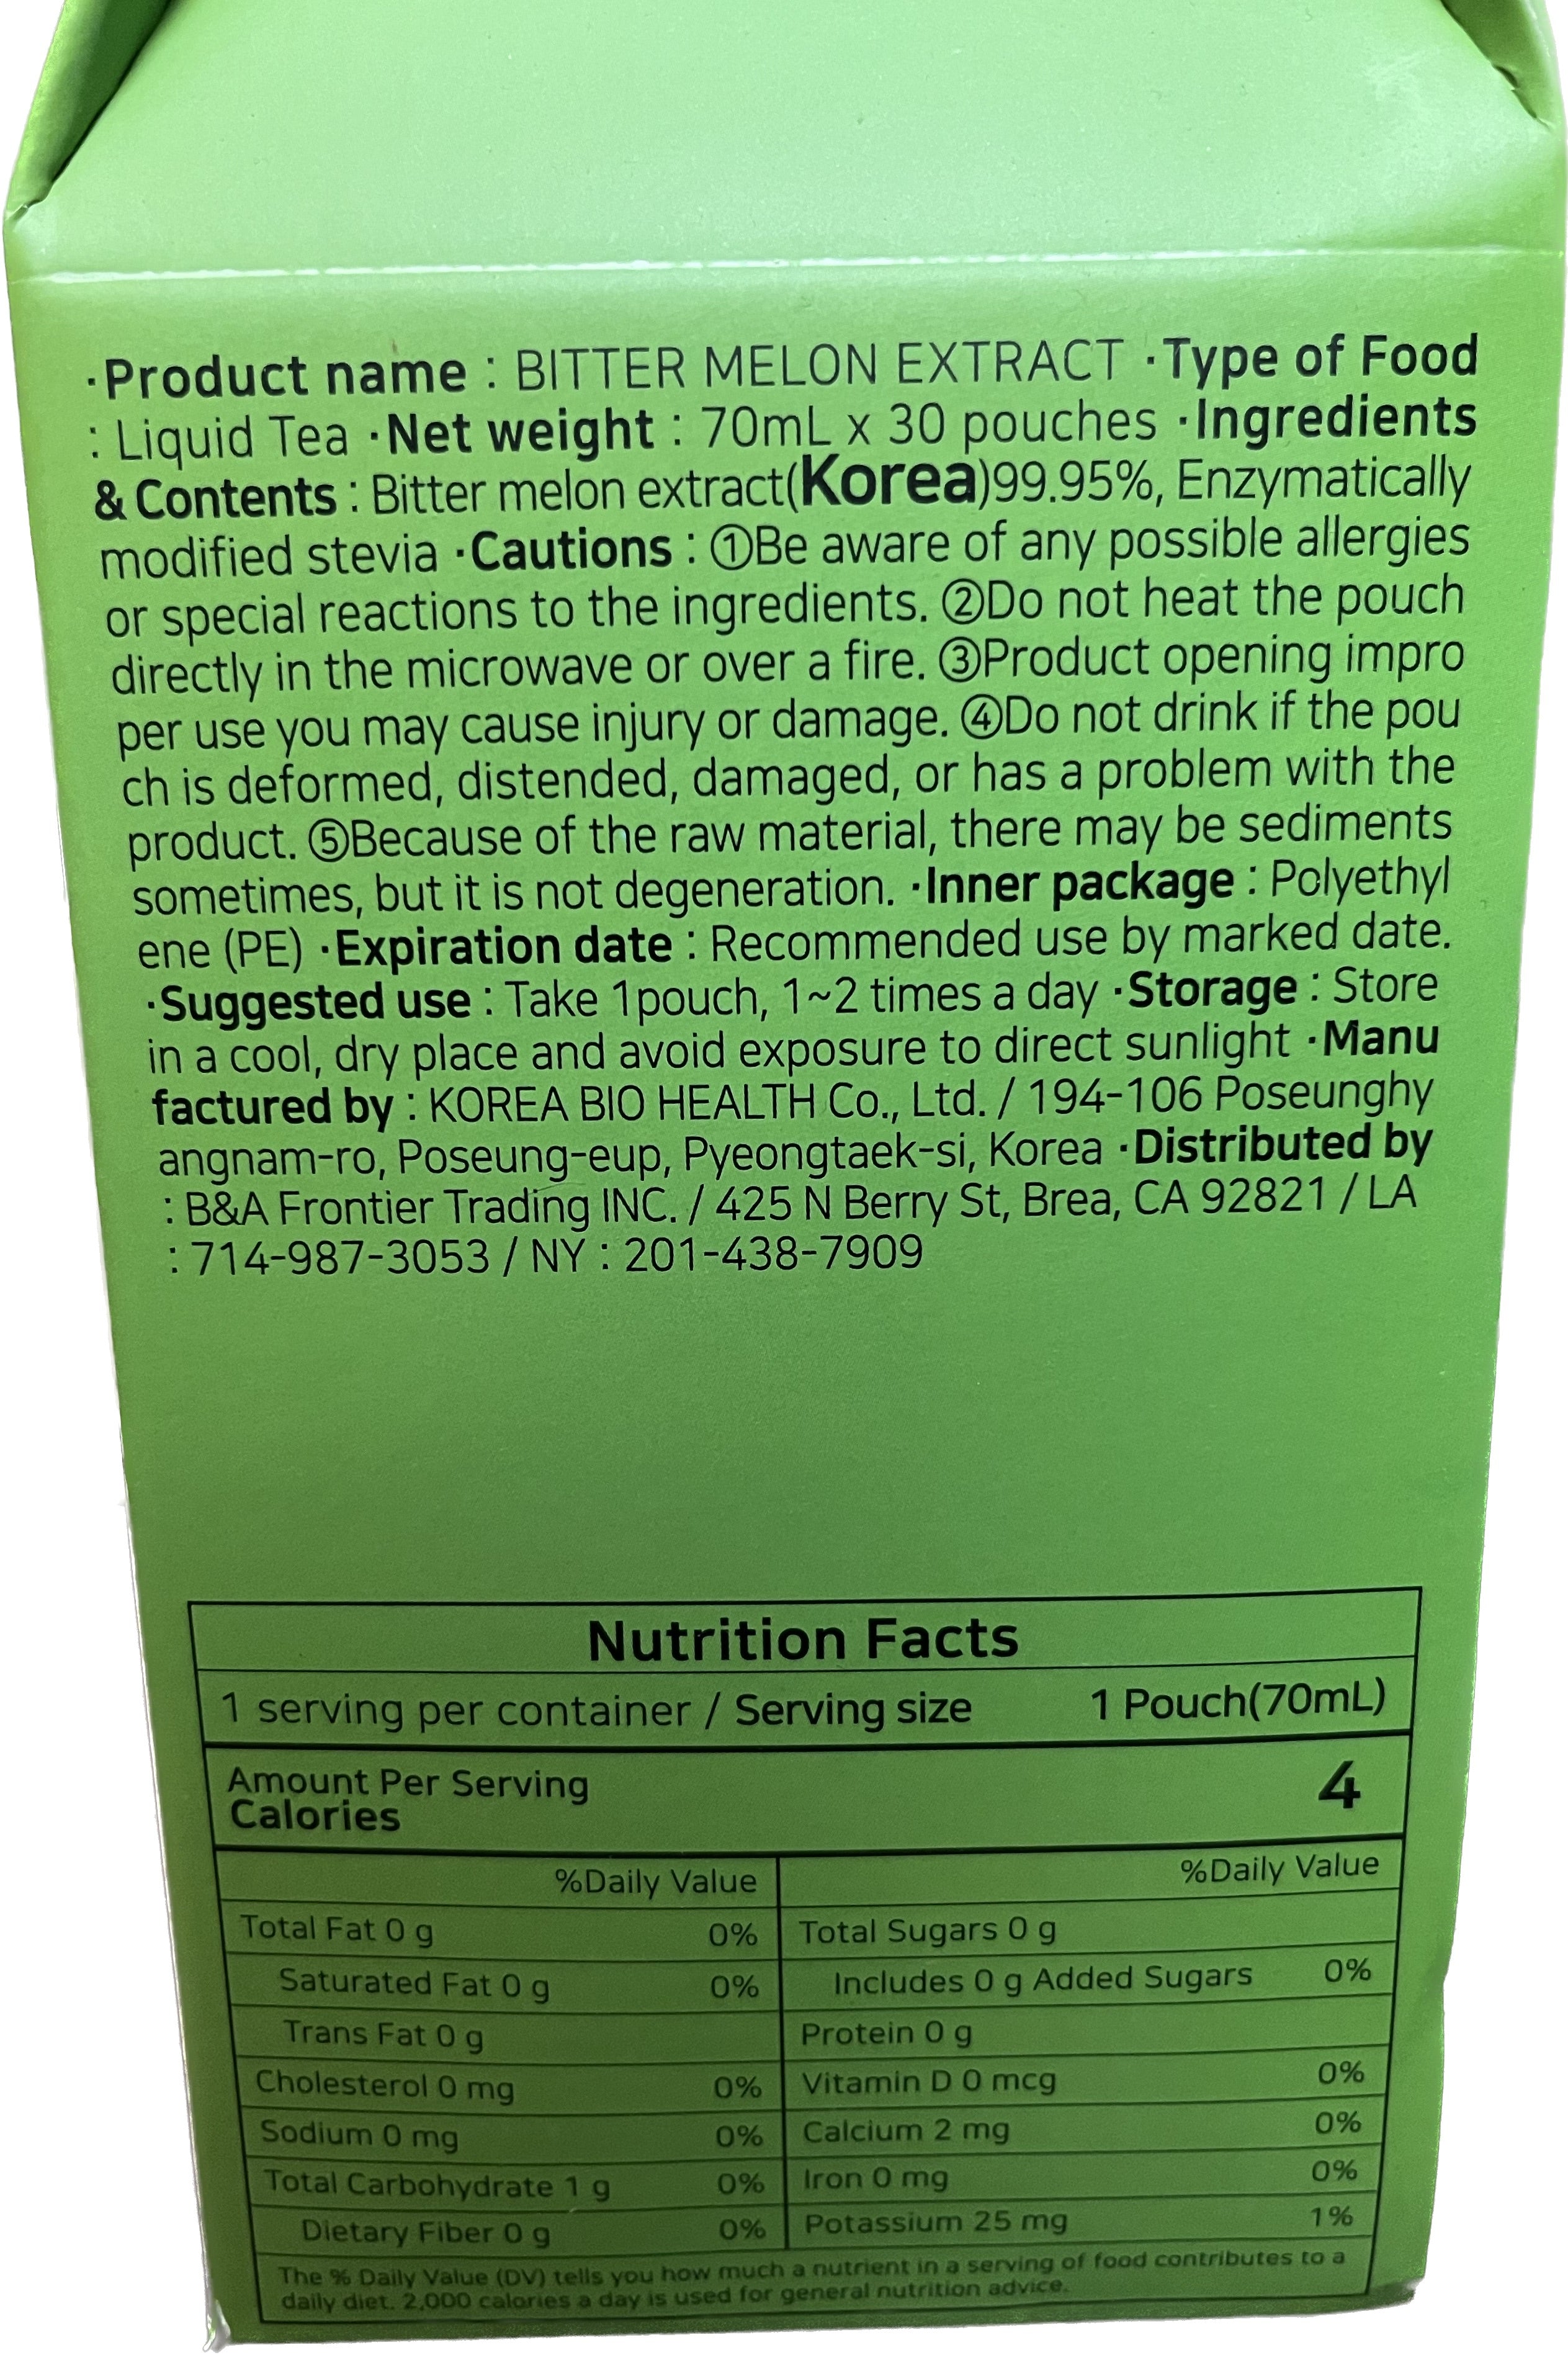 Pine Tree Brand- Bitter Melon Extract 70mL x 30 - 0